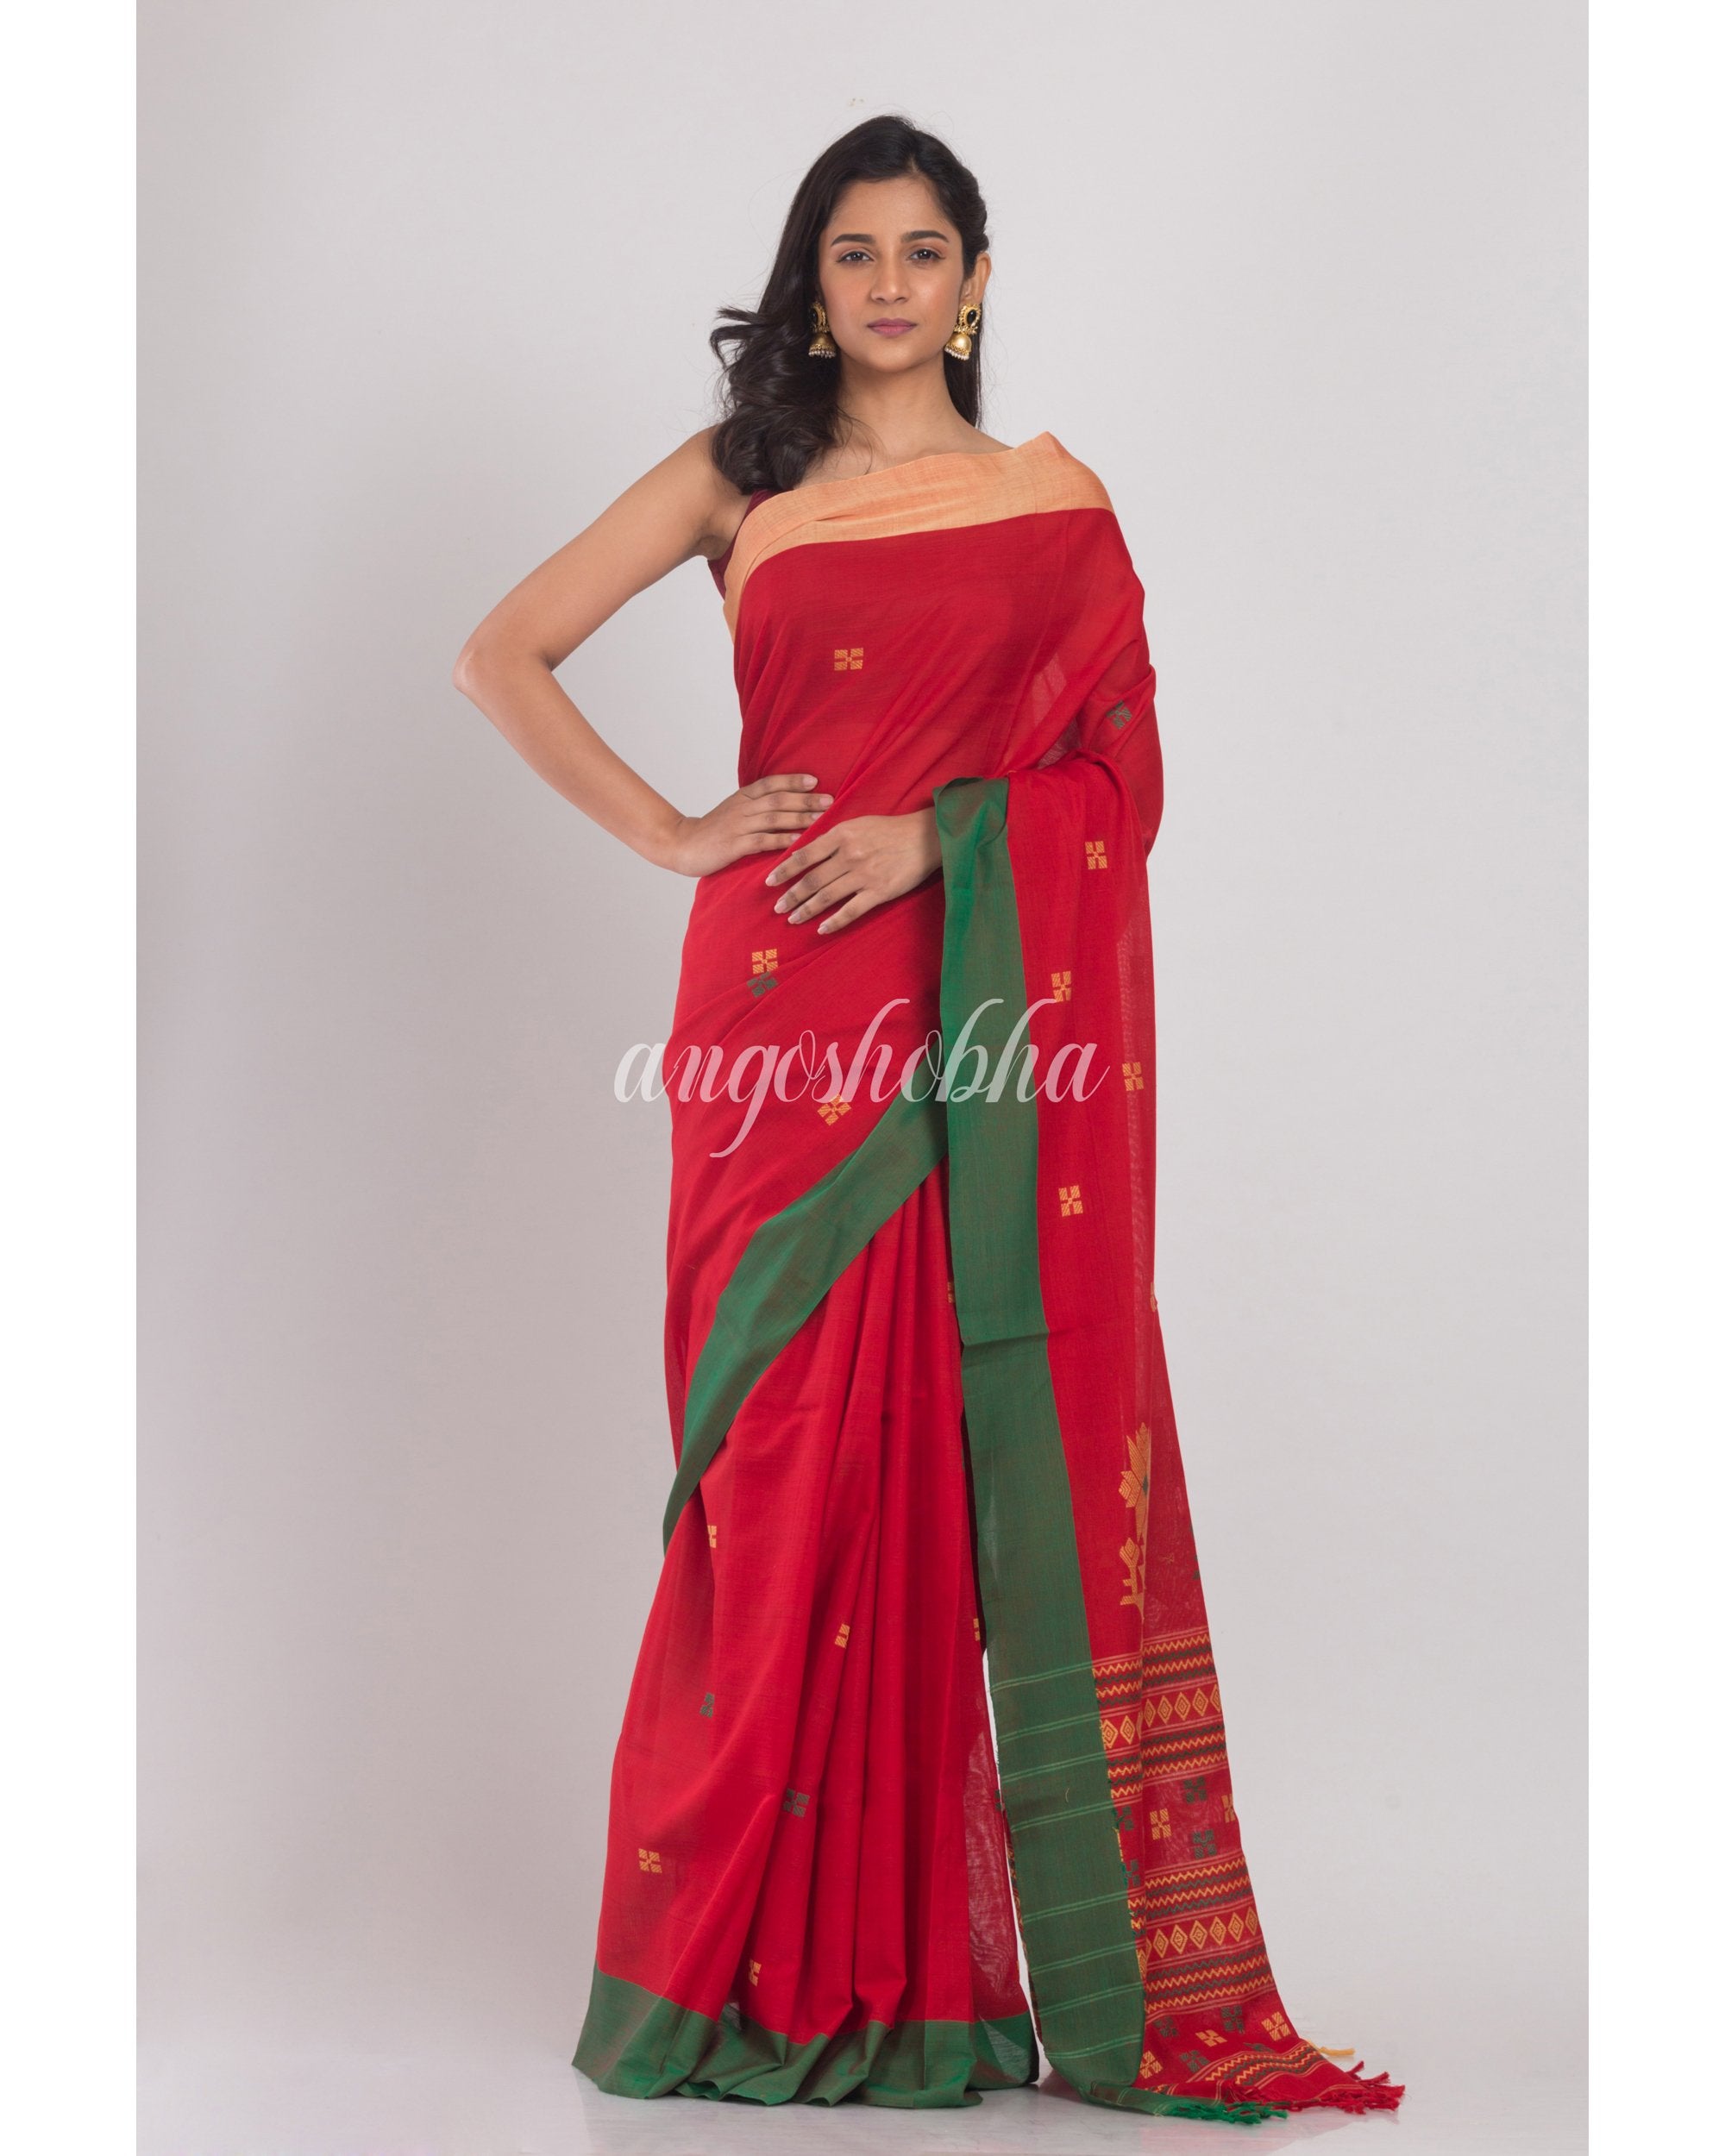 Women's Red Handloom Cotton Saree - Angoshobha